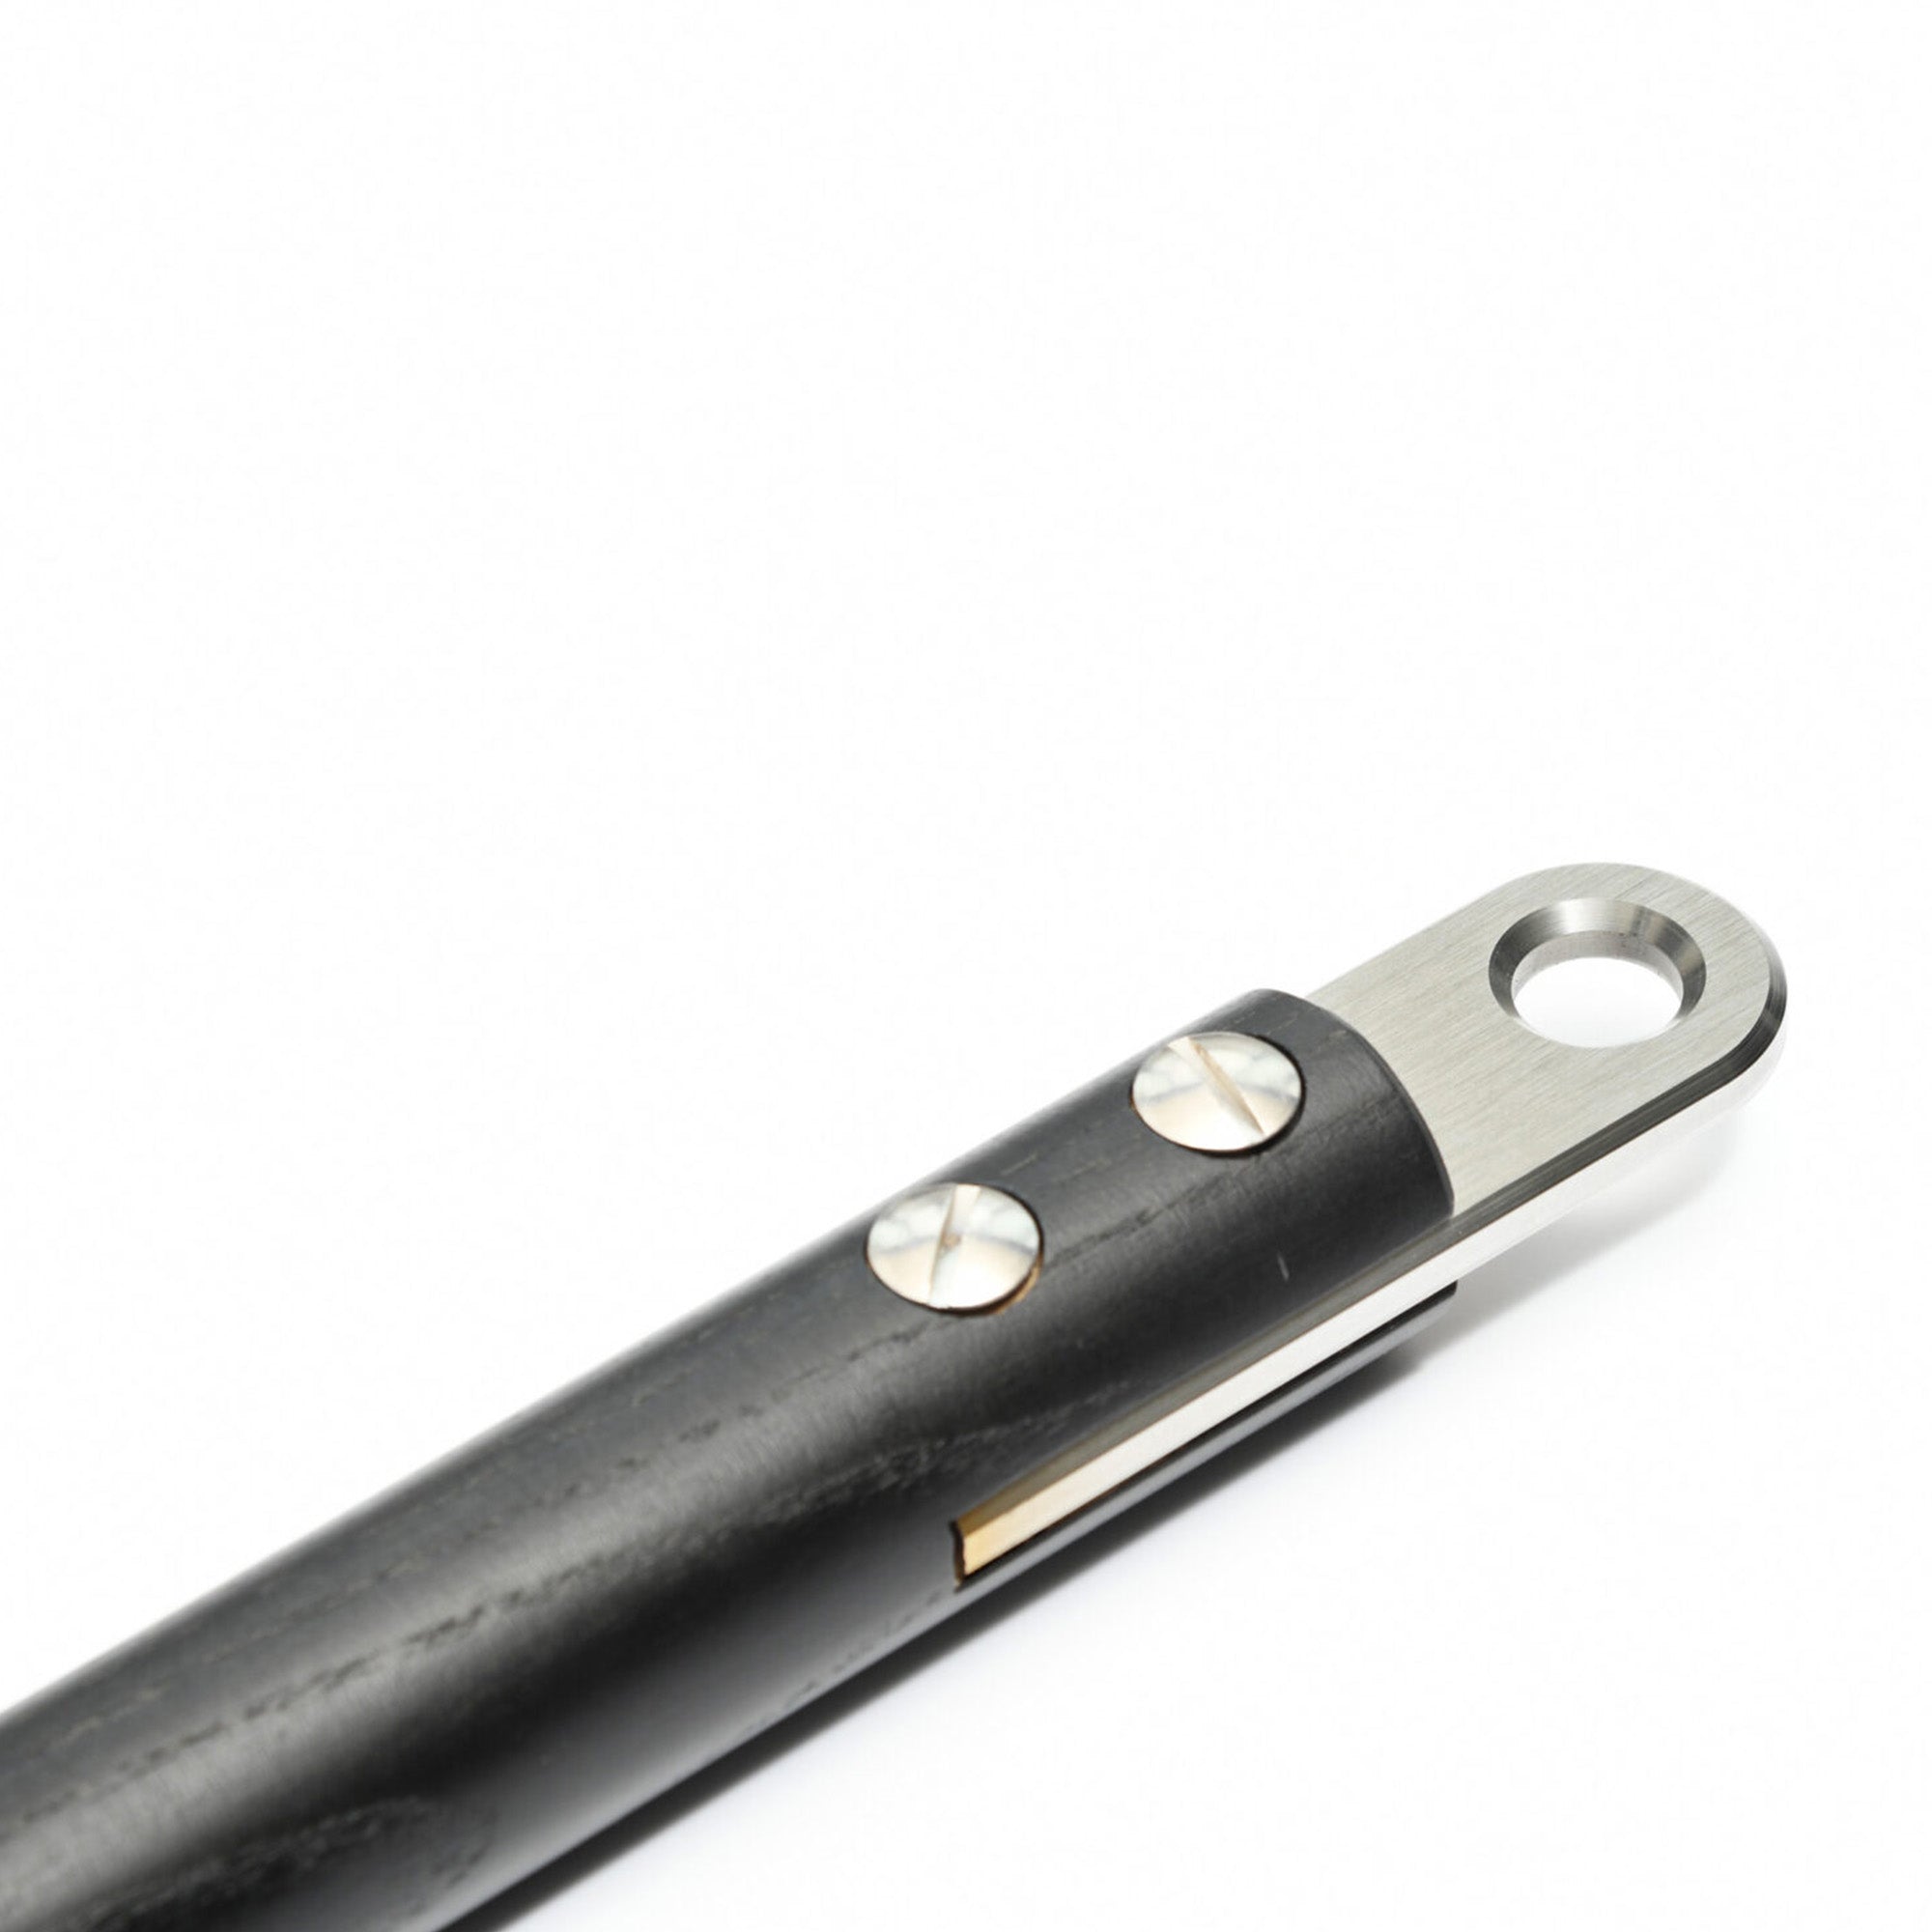 STIL-FIT Double Pull Rod/Chop Bar